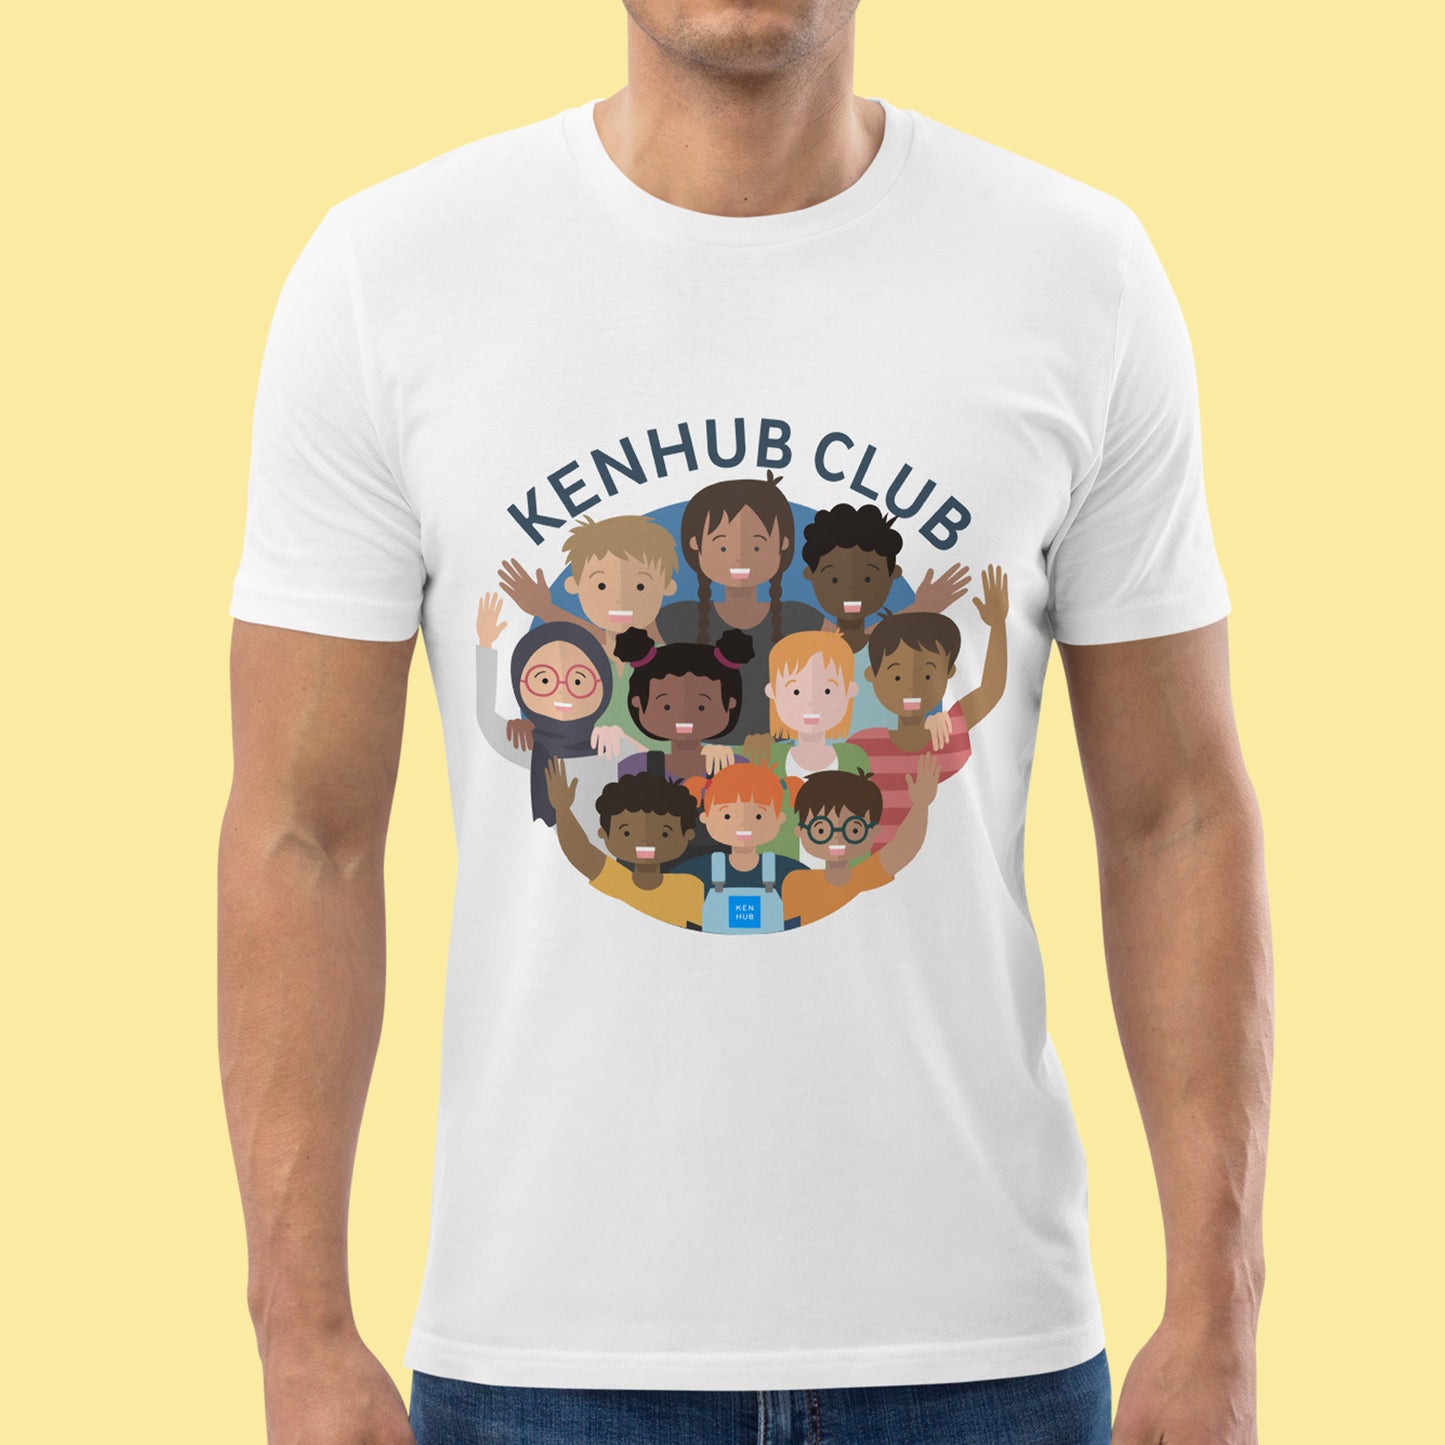 Kenhub Club - Unisex Organic Cotton T-shirt